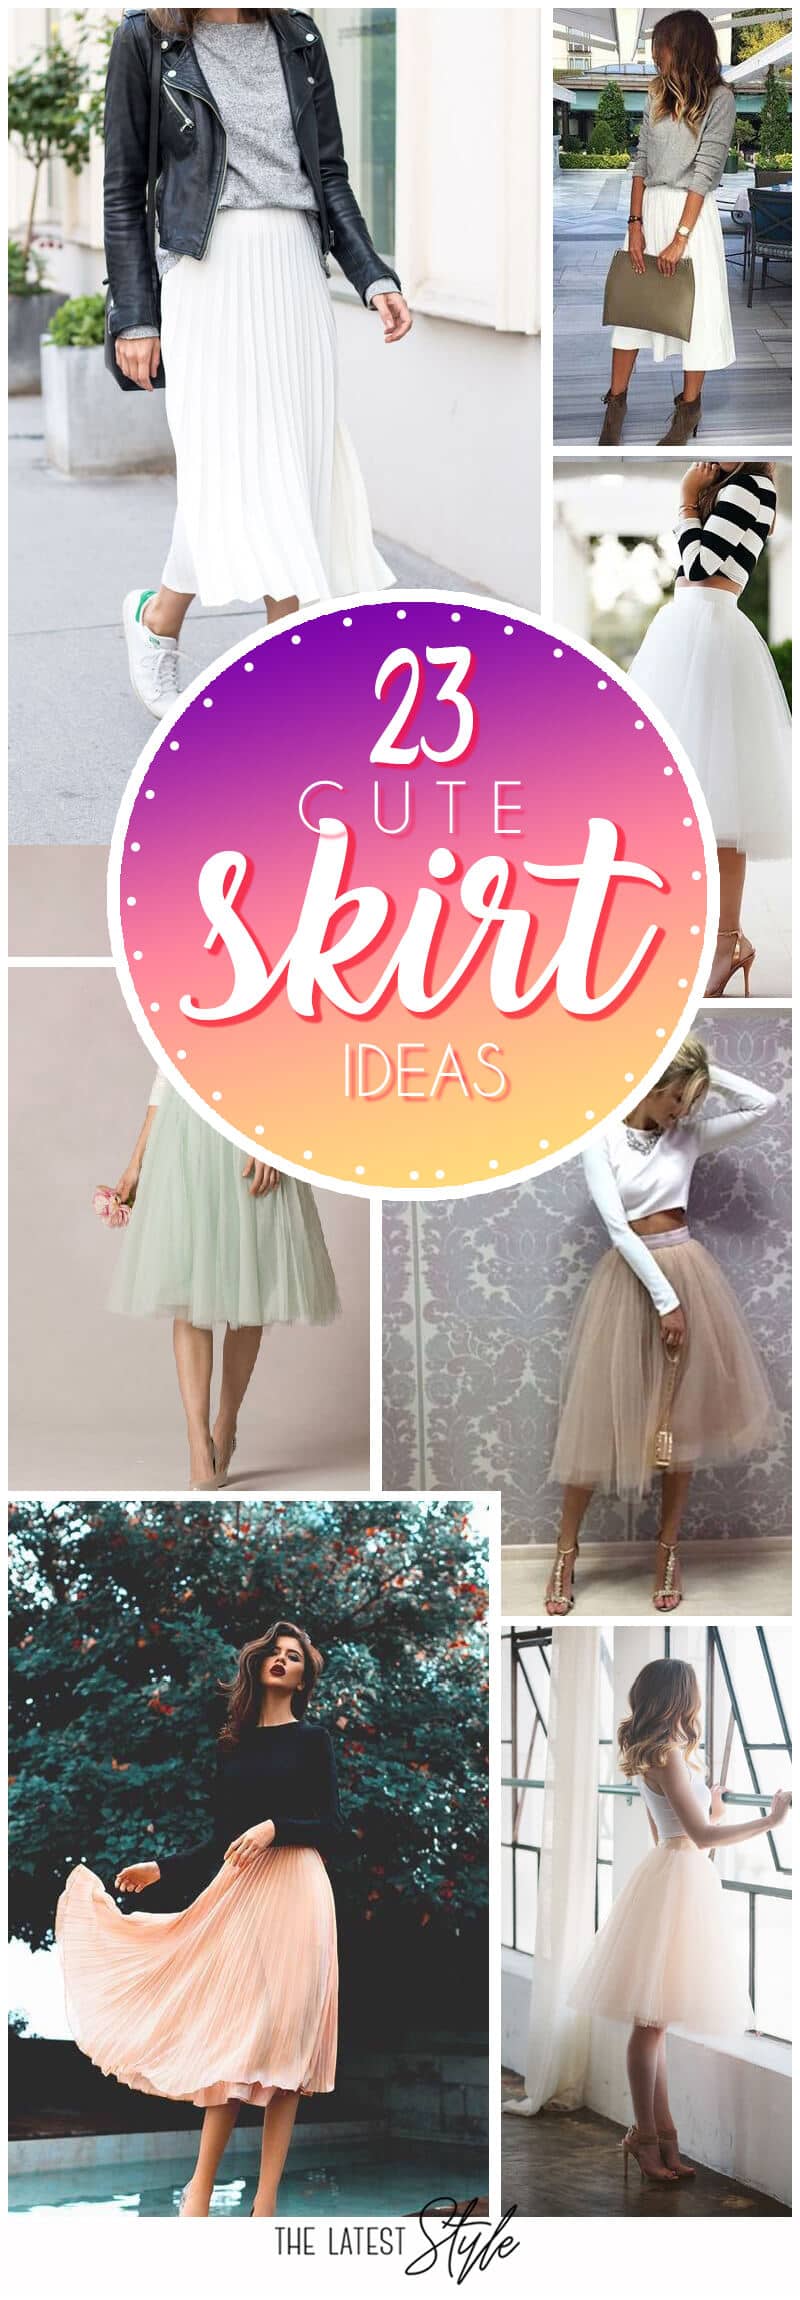 23 Cute Skirt Outfit Ideas